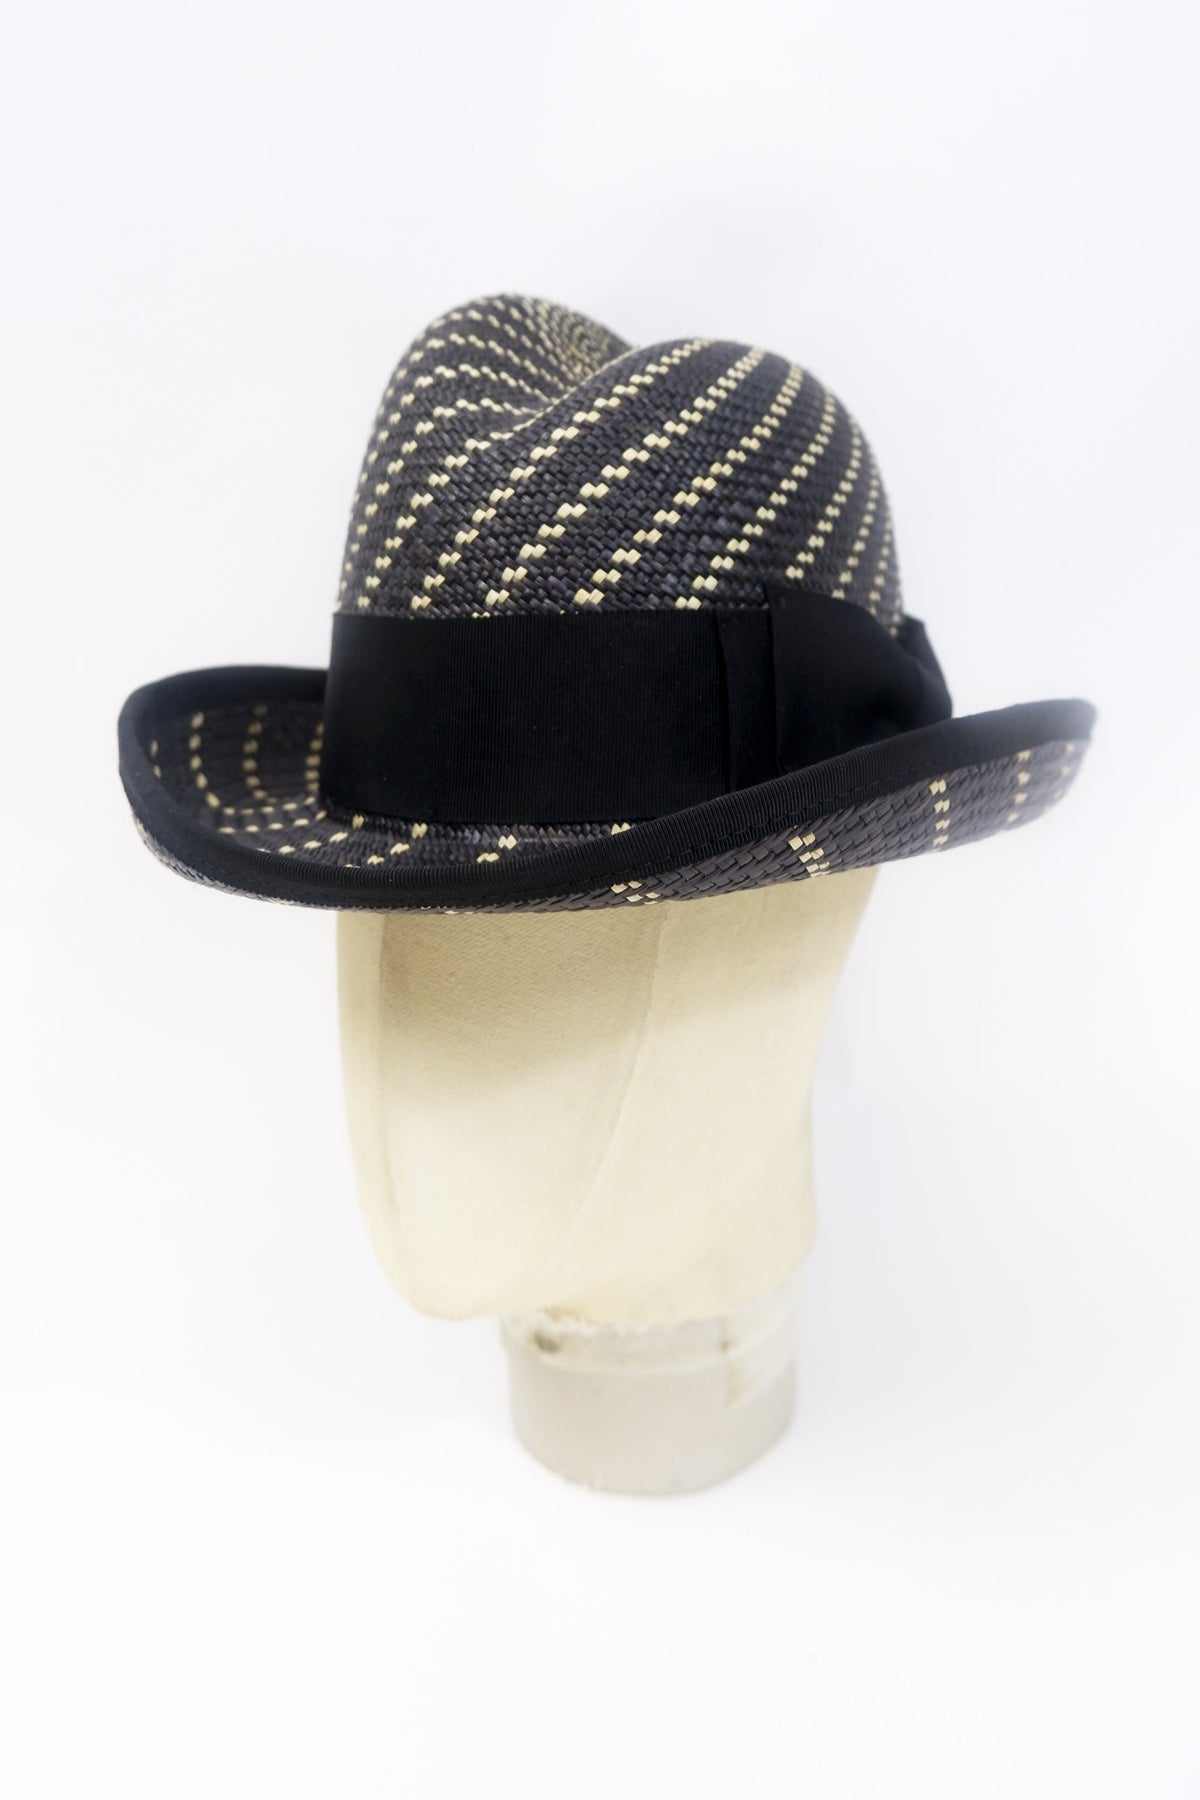 PANAMA FLASH TIPPER - CLASSIC BLACK TWIST-hats-A Child Of The Jago